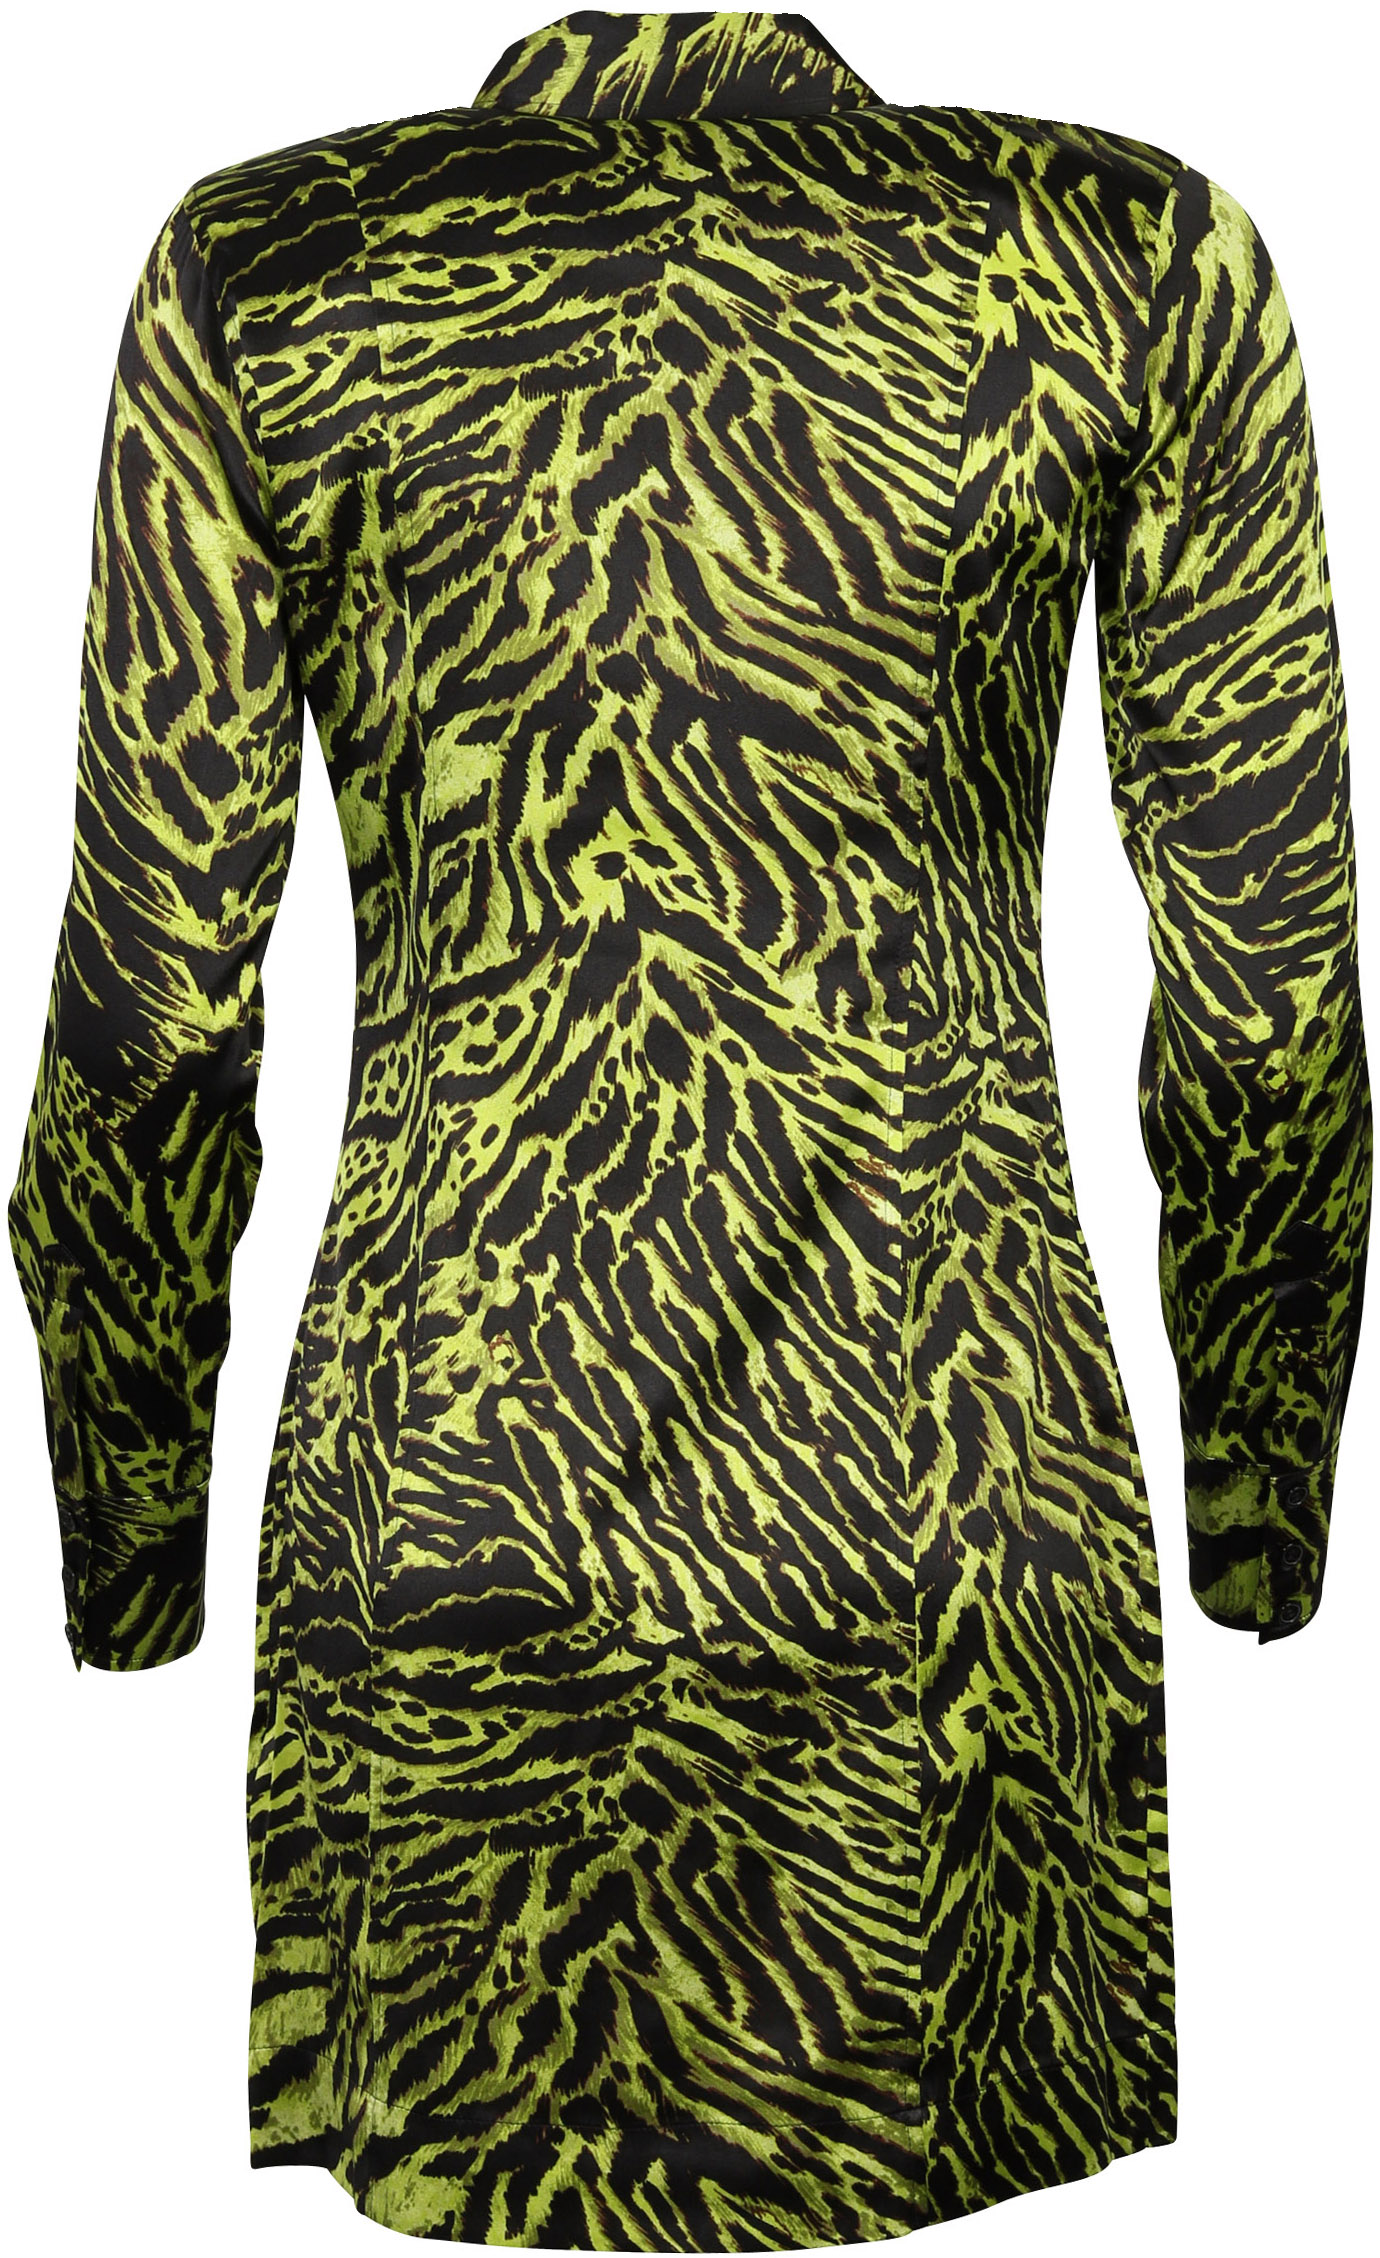 Ganni Shirt Dress Lime Tiger Print 36